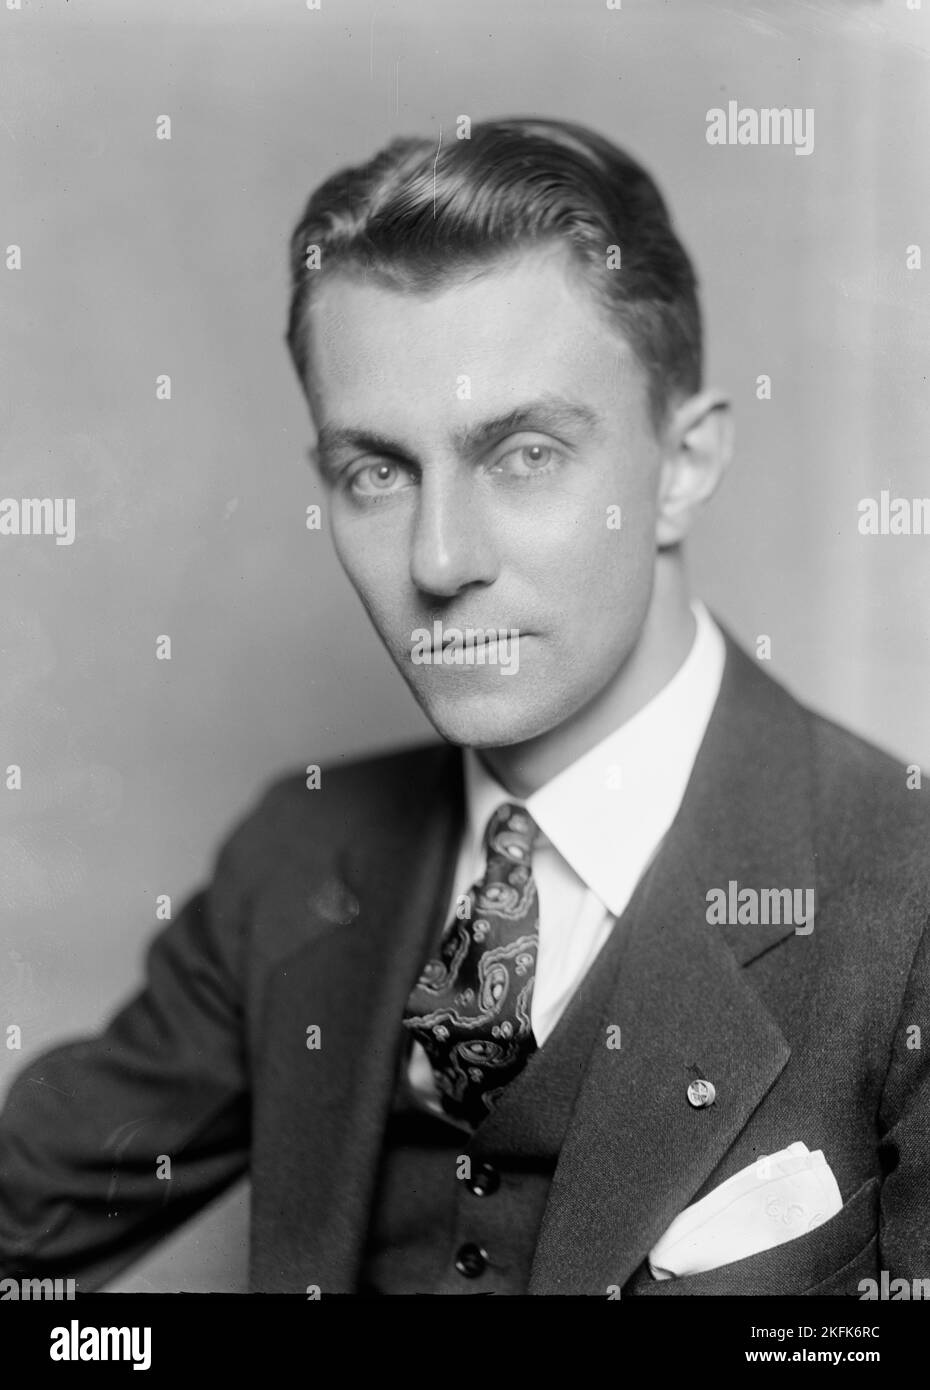 Clarke P. Cole, Portrait, 1933. Stock Photo